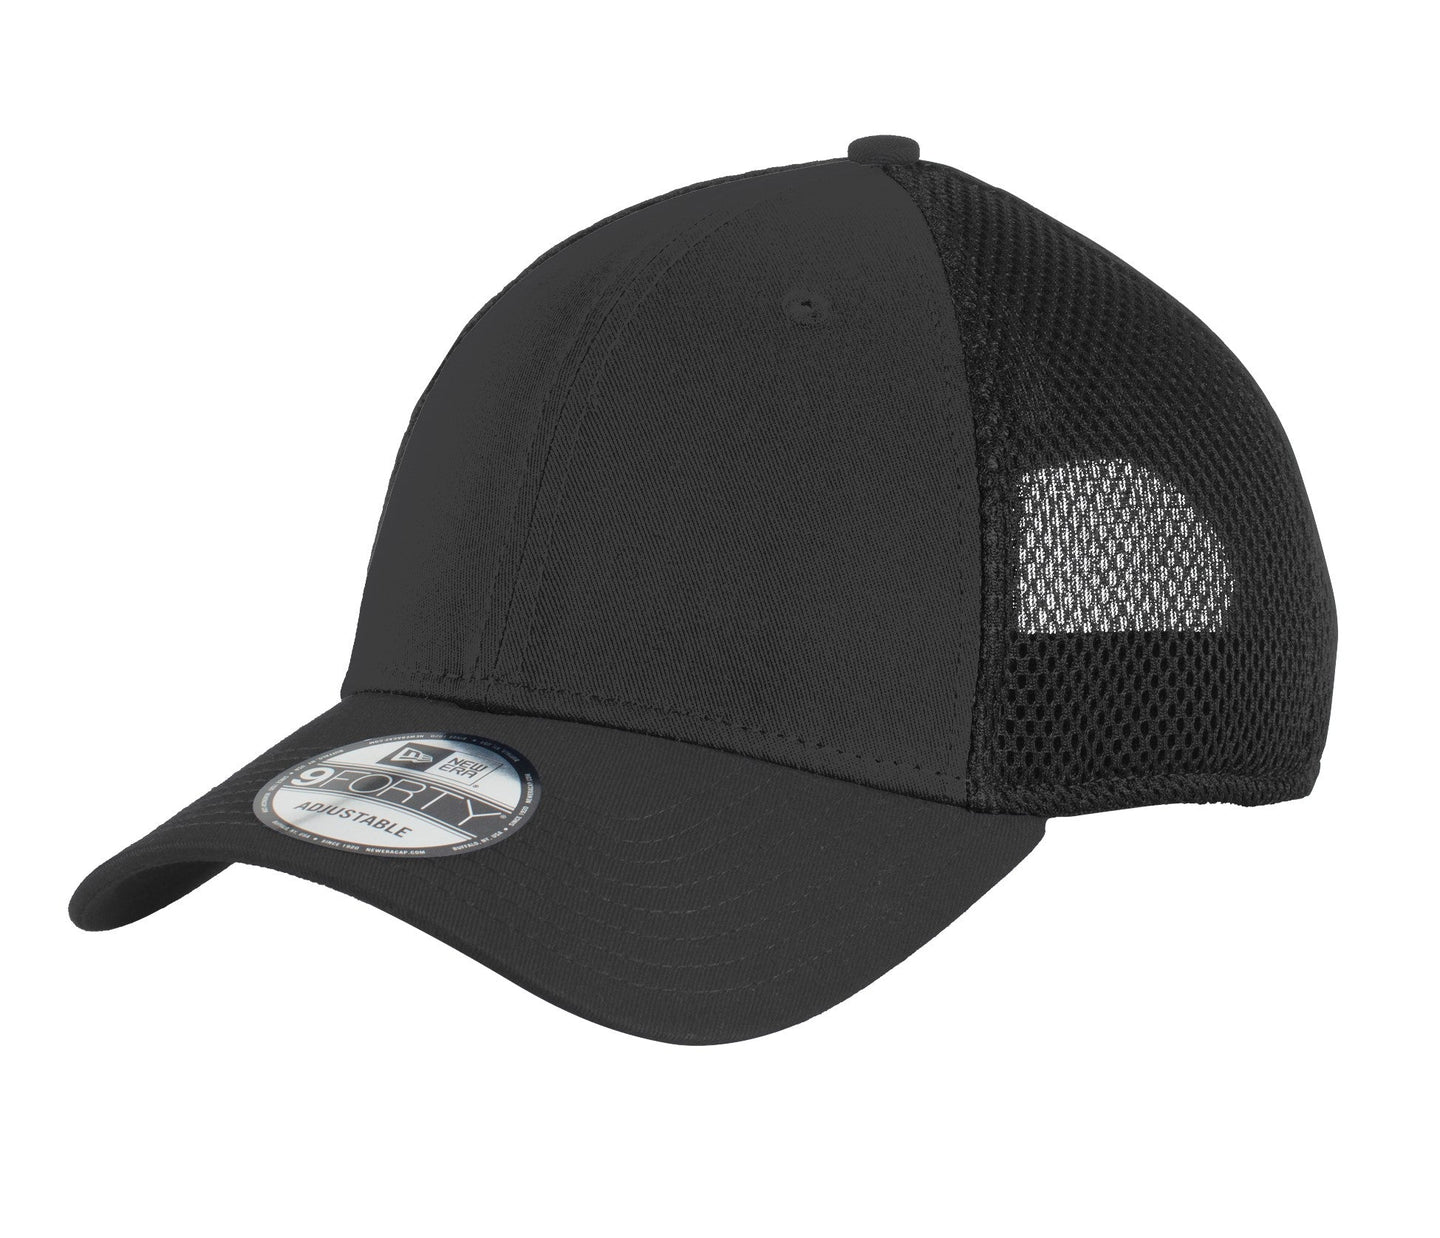 Midwest Xtreme Adjustable Snap-back Hat